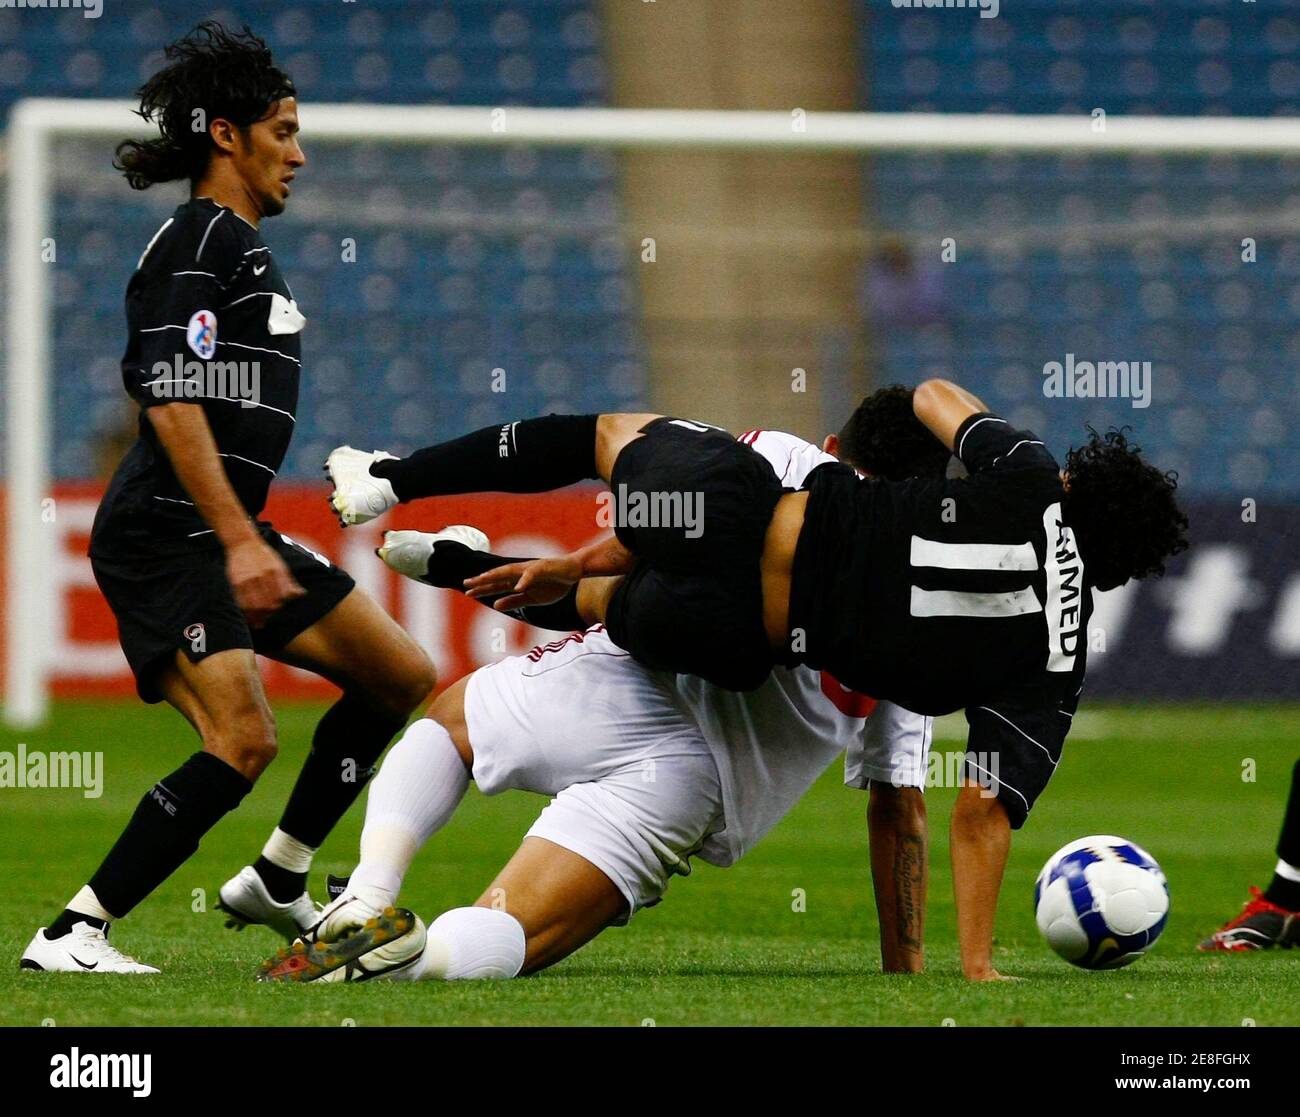 Ahmed Ateef, de l'Arabie Saoudite, Al-Shabab (Black) se bat pour le ballon avec Roberto Lopes de l'eau Al Sharjah lors de leur match de football de la Ligue des champions de l'AFC à Riyad le 21 avril 2009. REUTERS/Fahad Shadeed (FOOTBALL DE SPORT EN ARABIE SAOUDITE) Banque D'Images